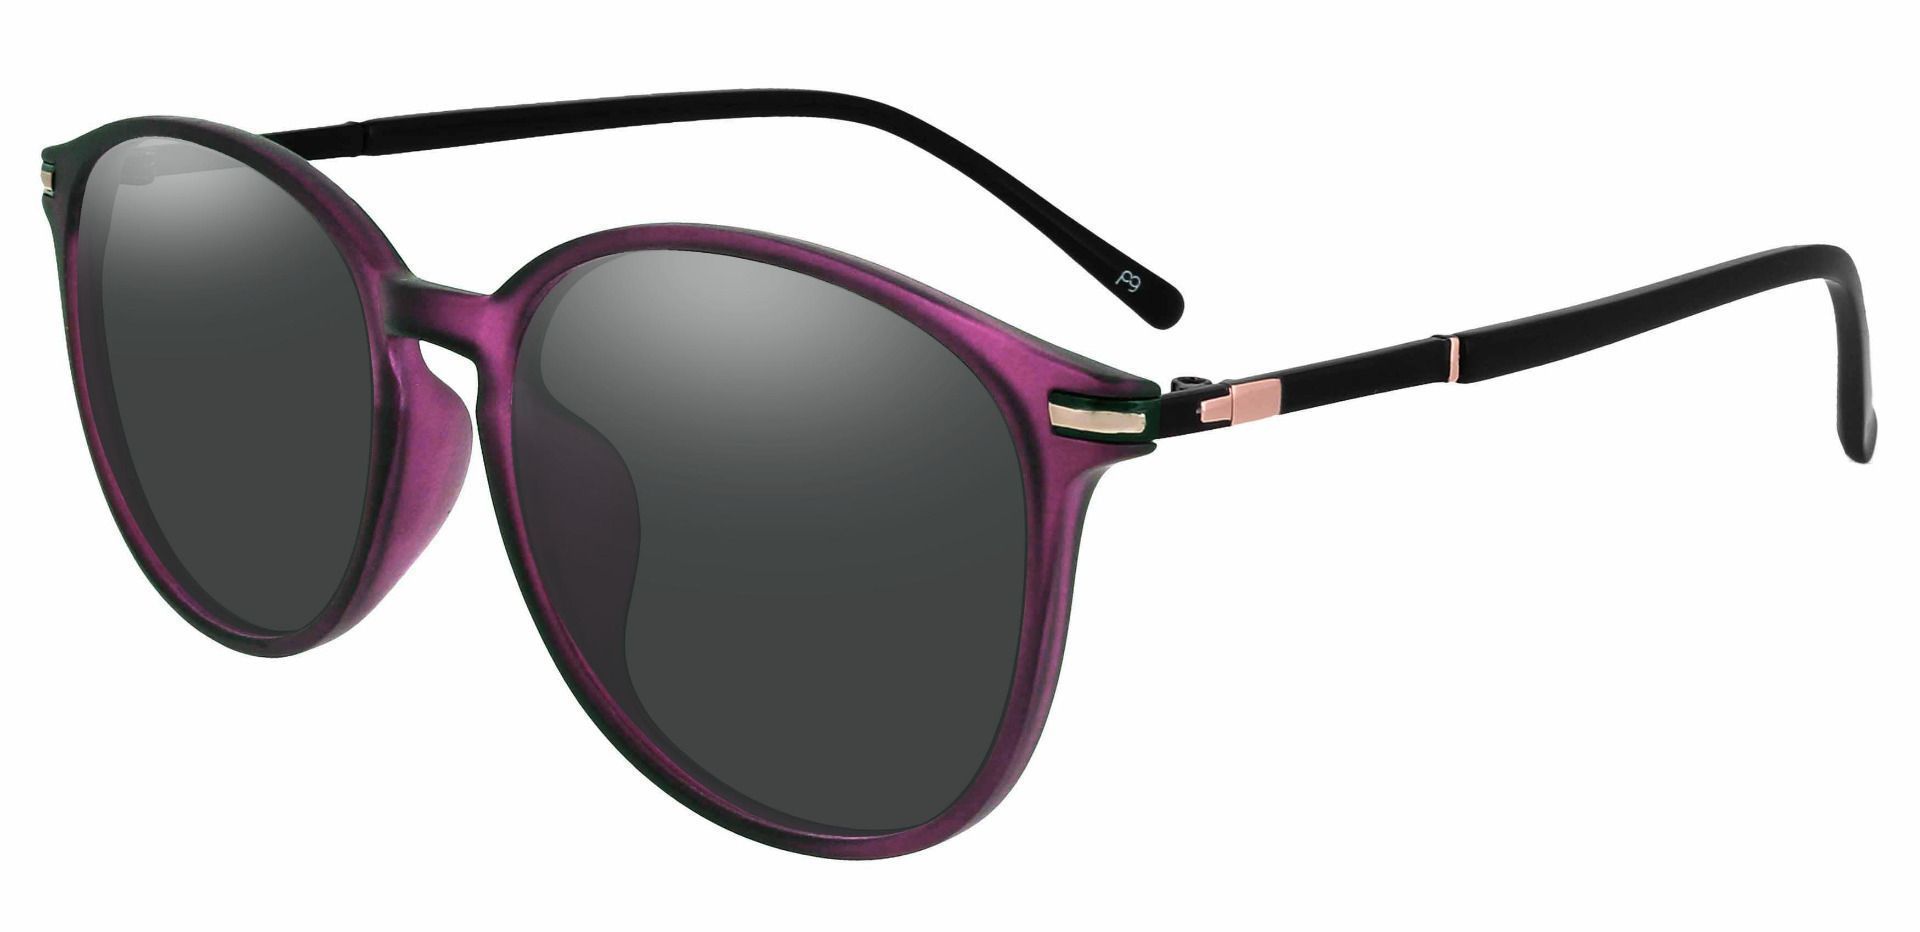 Danbury Oval Non-Rx Sunglasses - Purple Frame With Gray Lenses